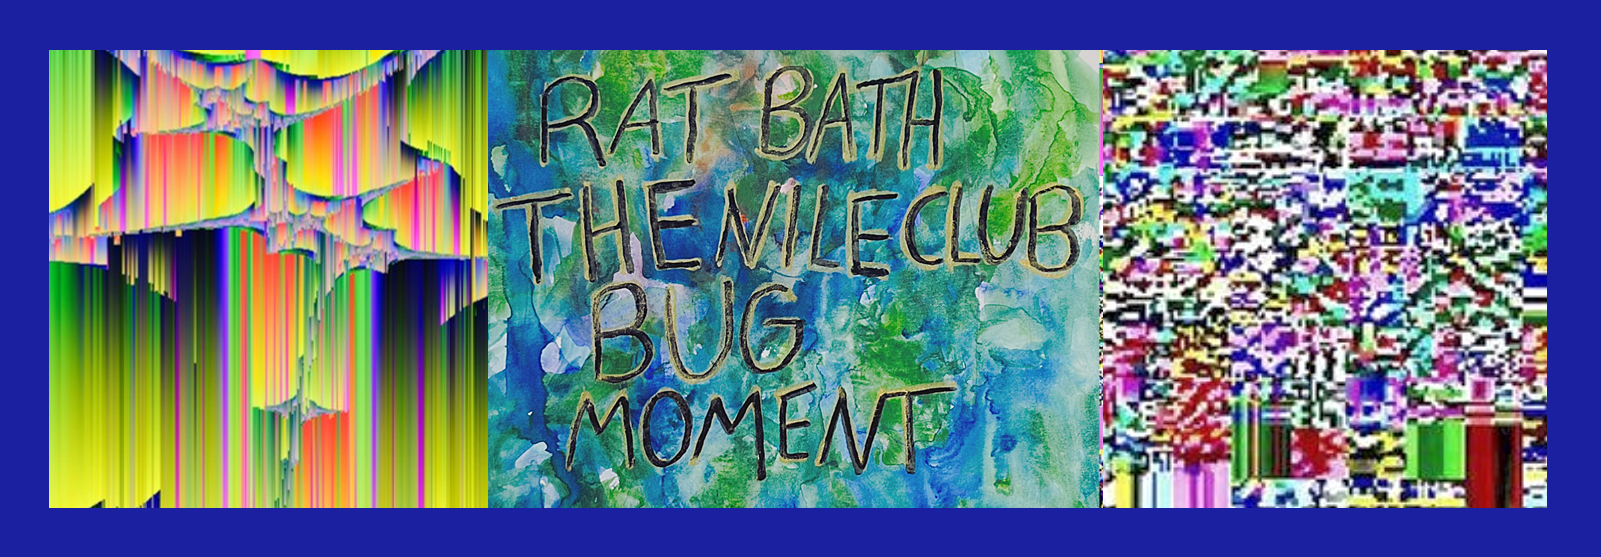 Rat Bath, The Nile Club & Bug Moment